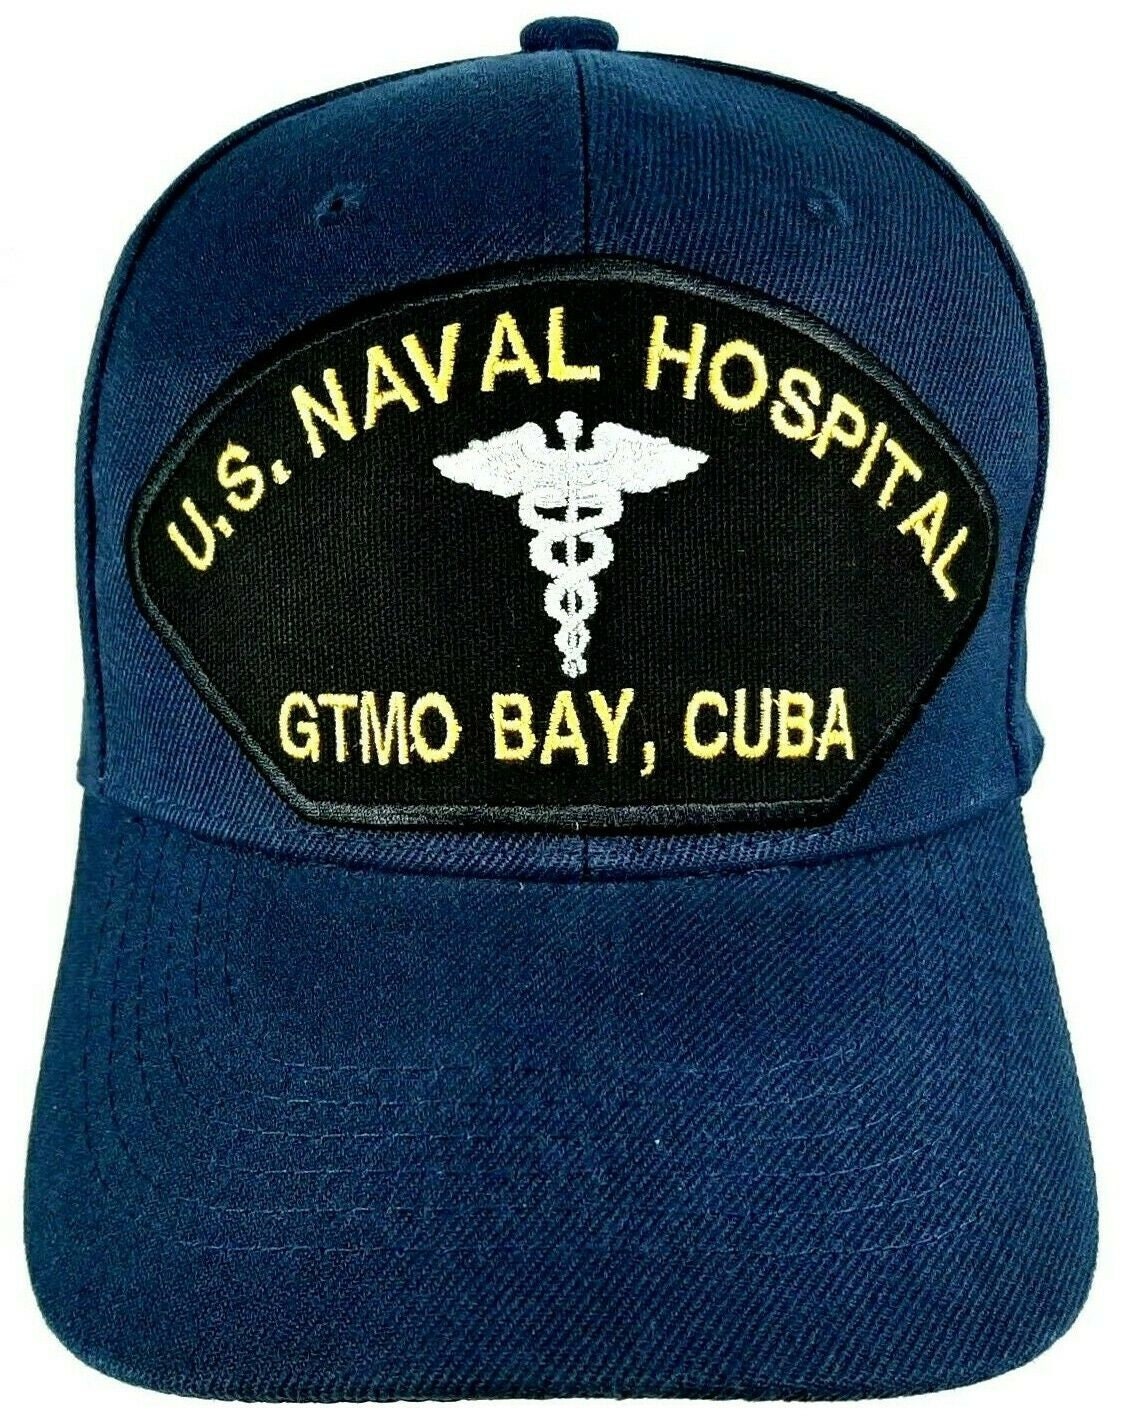 Naval Hospital GTMO Bay, Cuba Patch Hat Baseball Cap Adjustable Navy Blue Acrylic